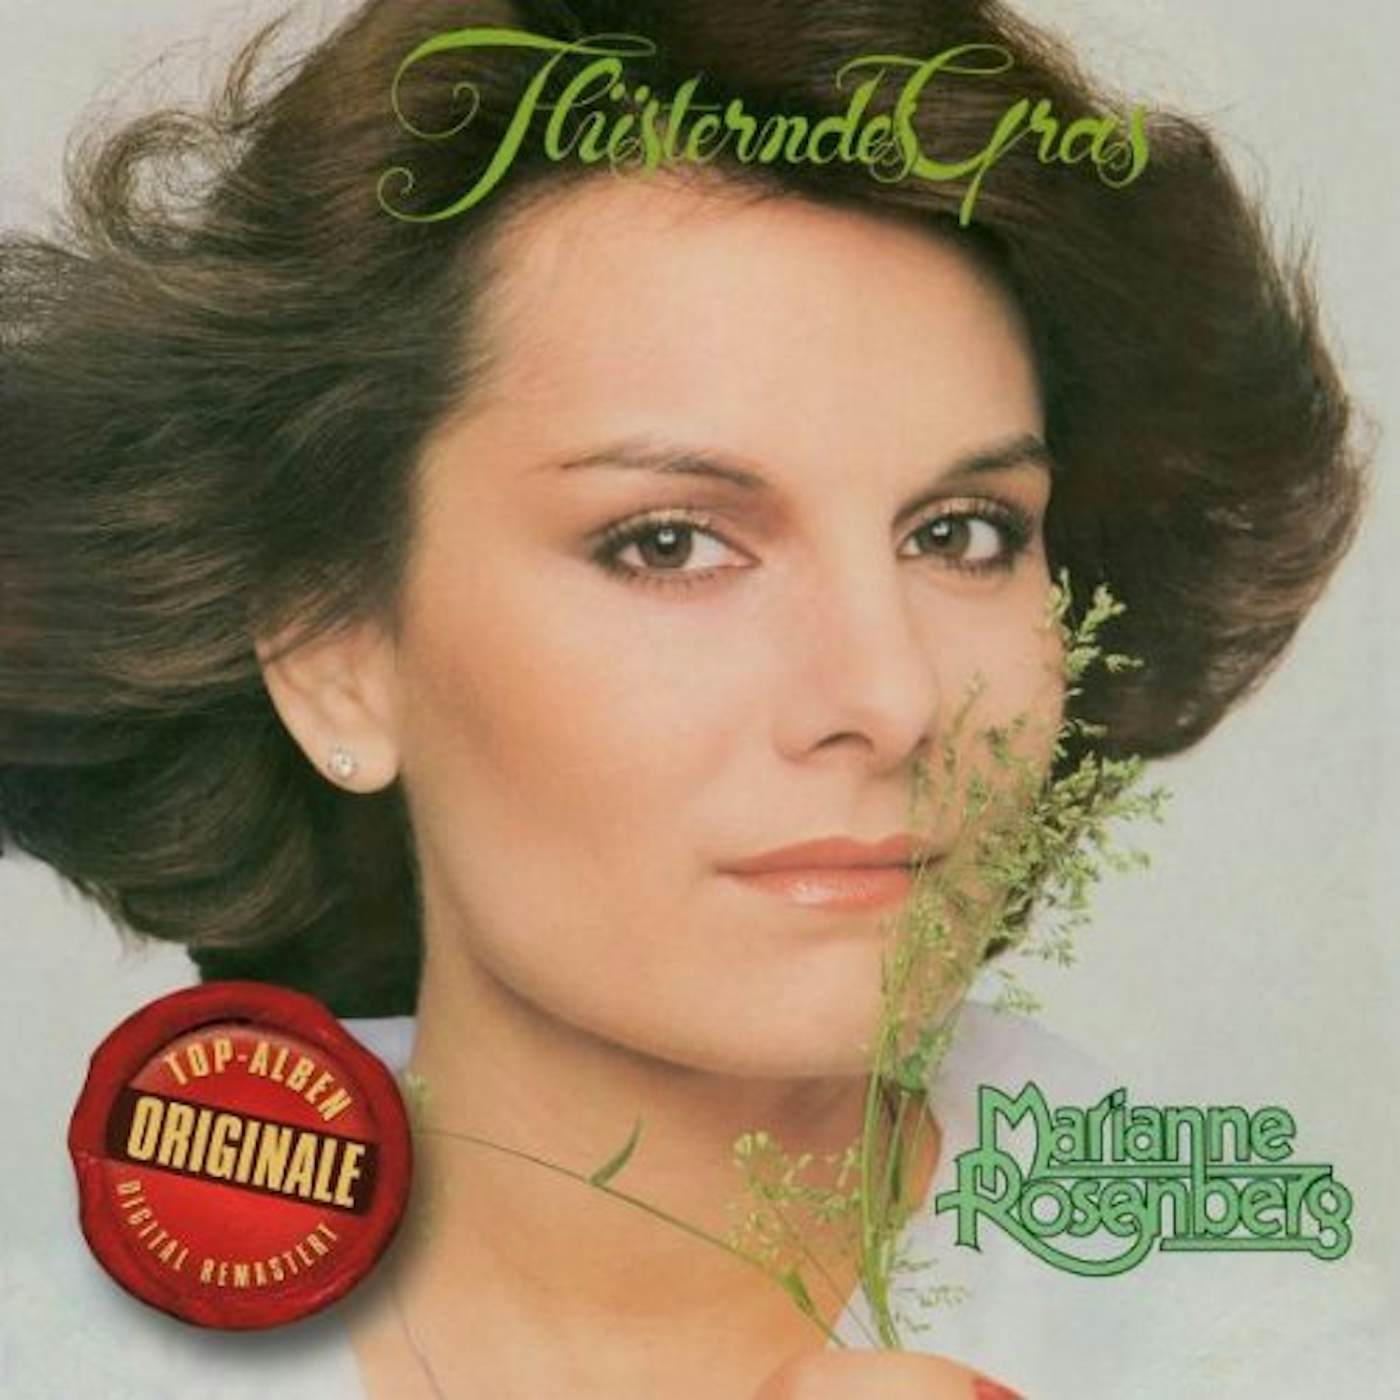 Marianne Rosenberg ORIGINALE: FLUSTERNDES GRAS CD